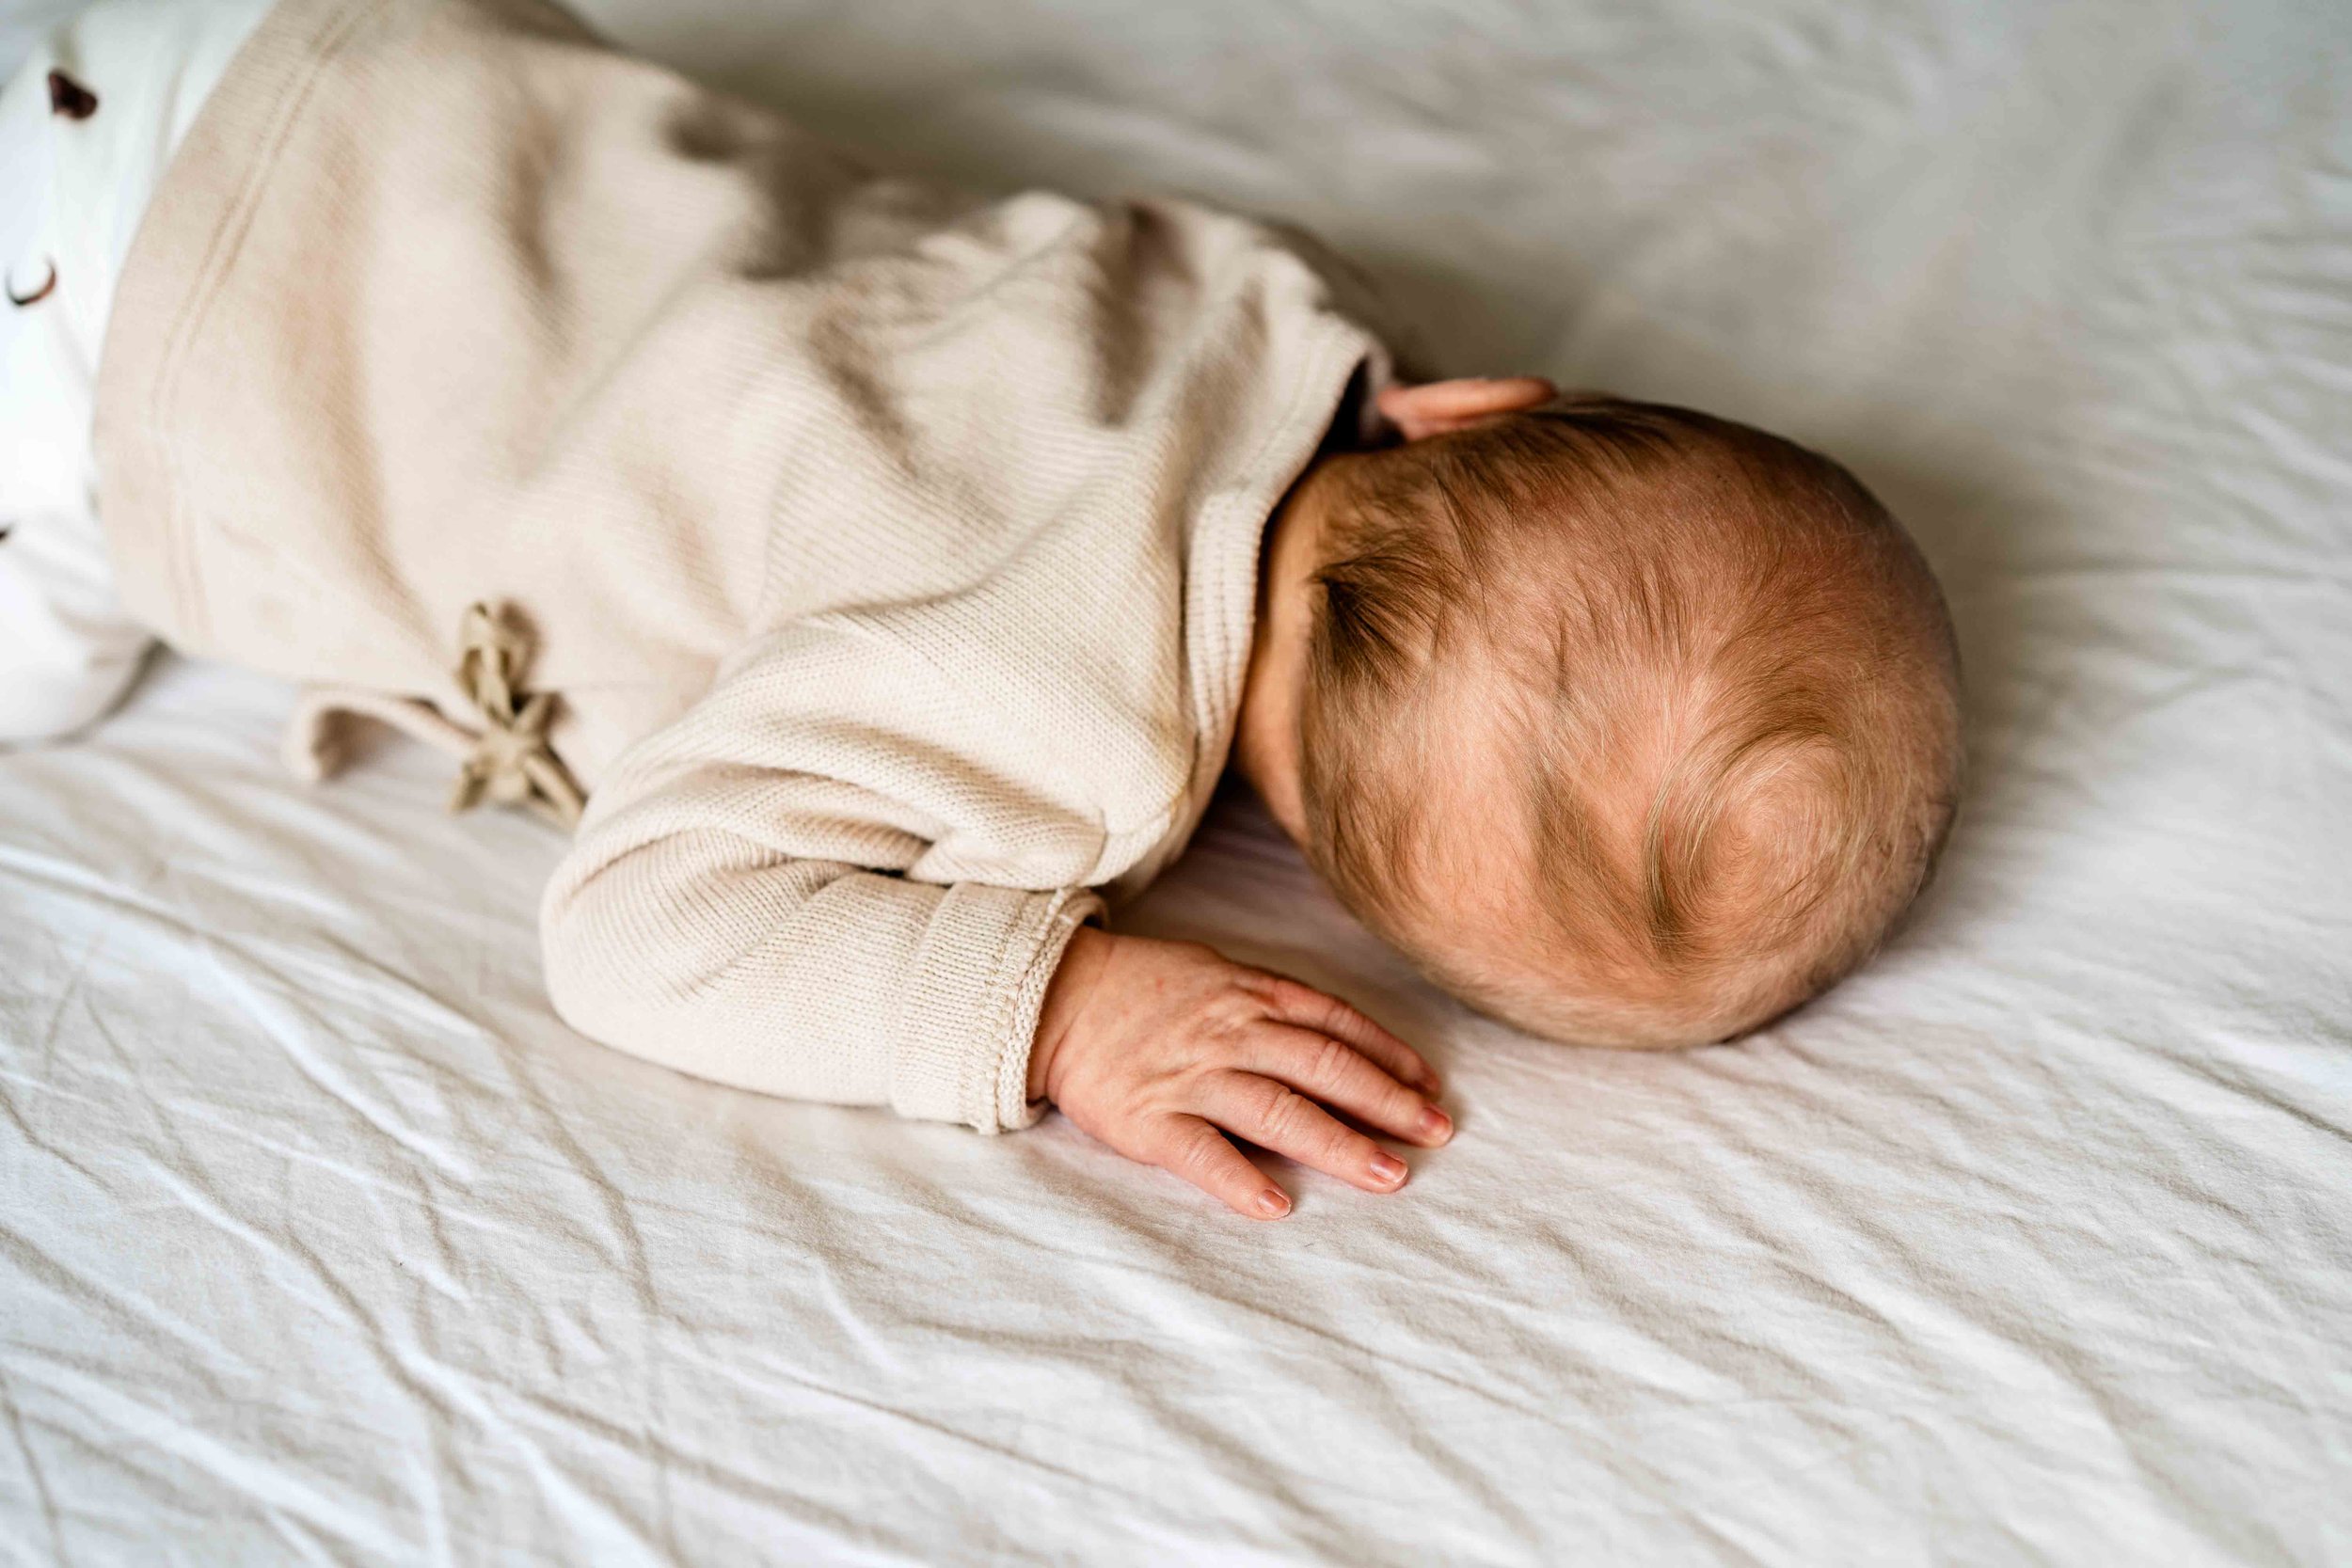 vankellyshand-familie-newborn-fotograaf-fotoshoot-5000.jpg